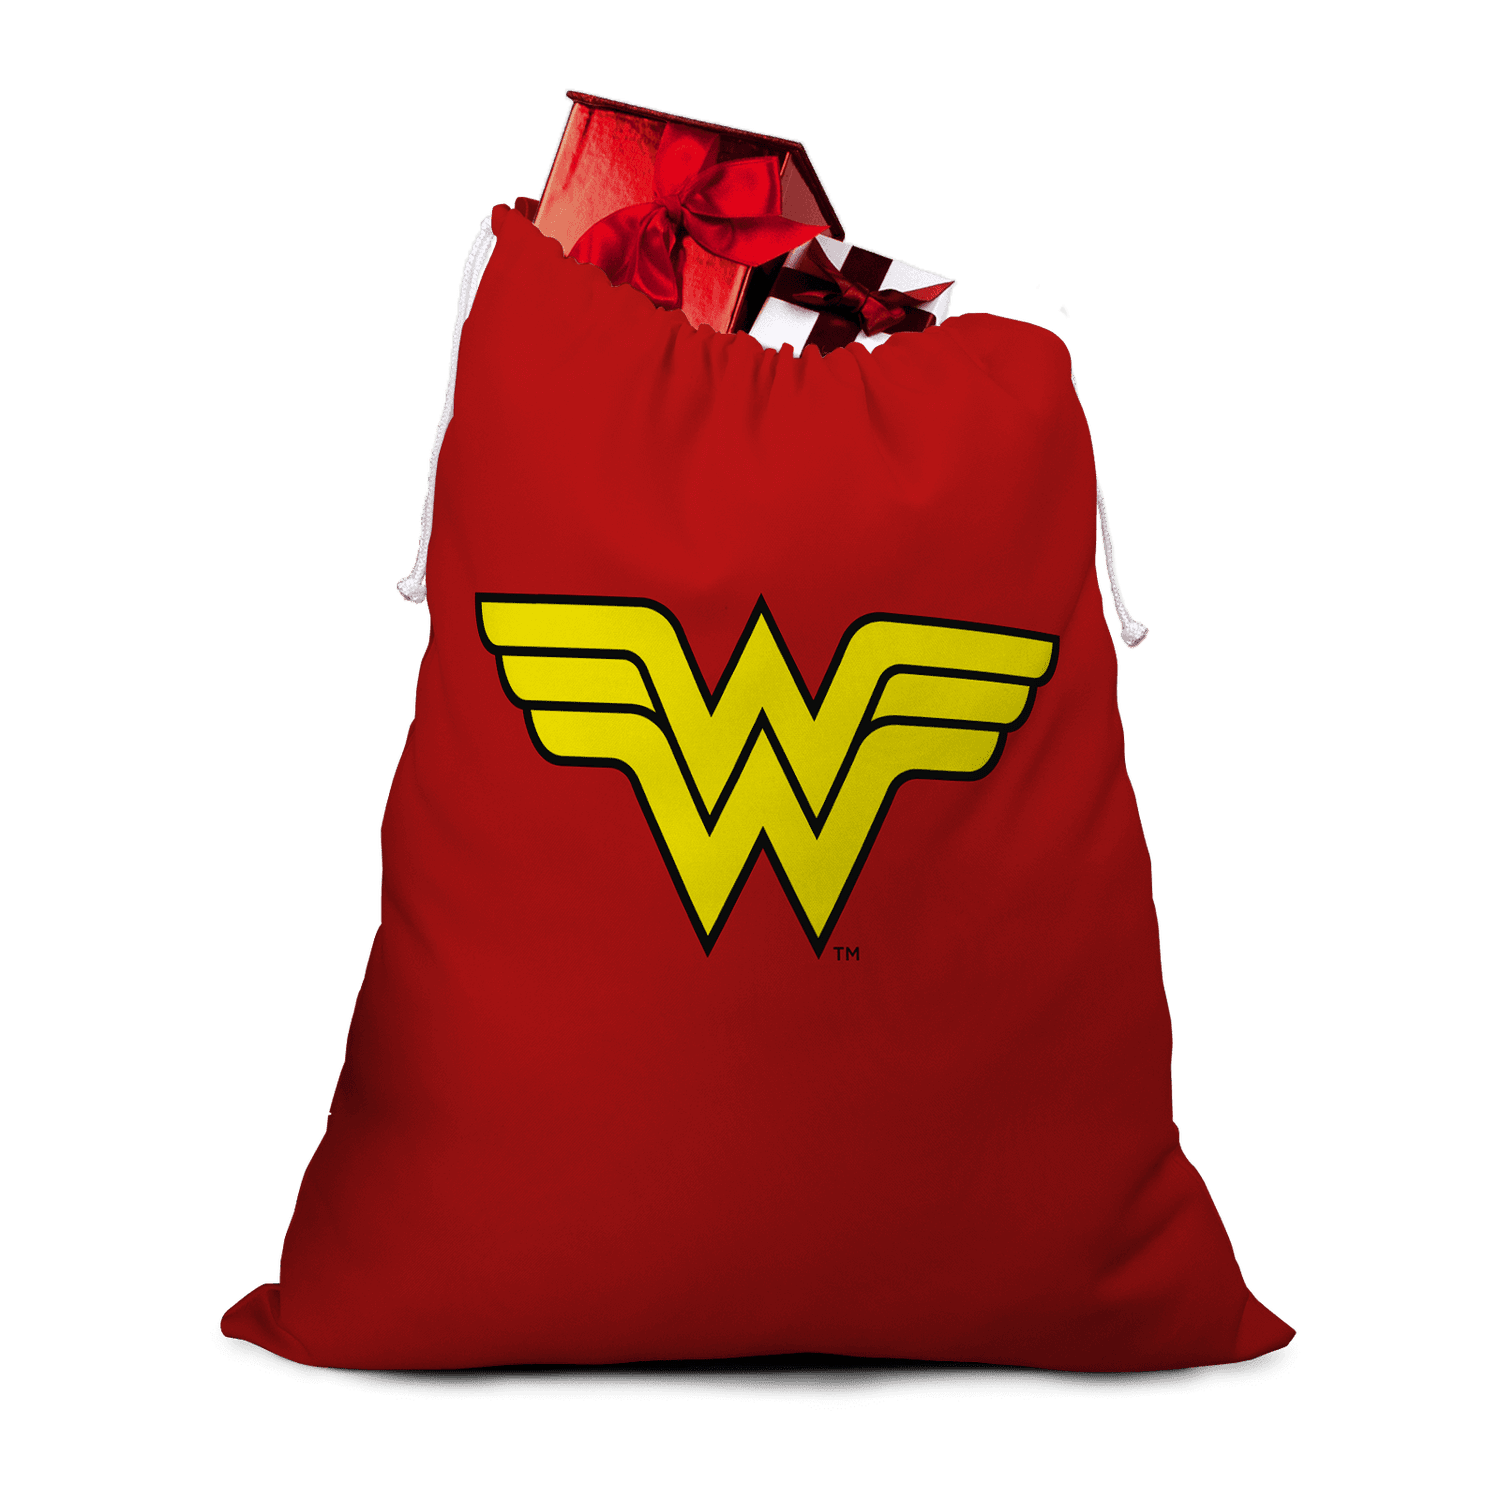 Wonder Woman Logo Christmas Santa Sack